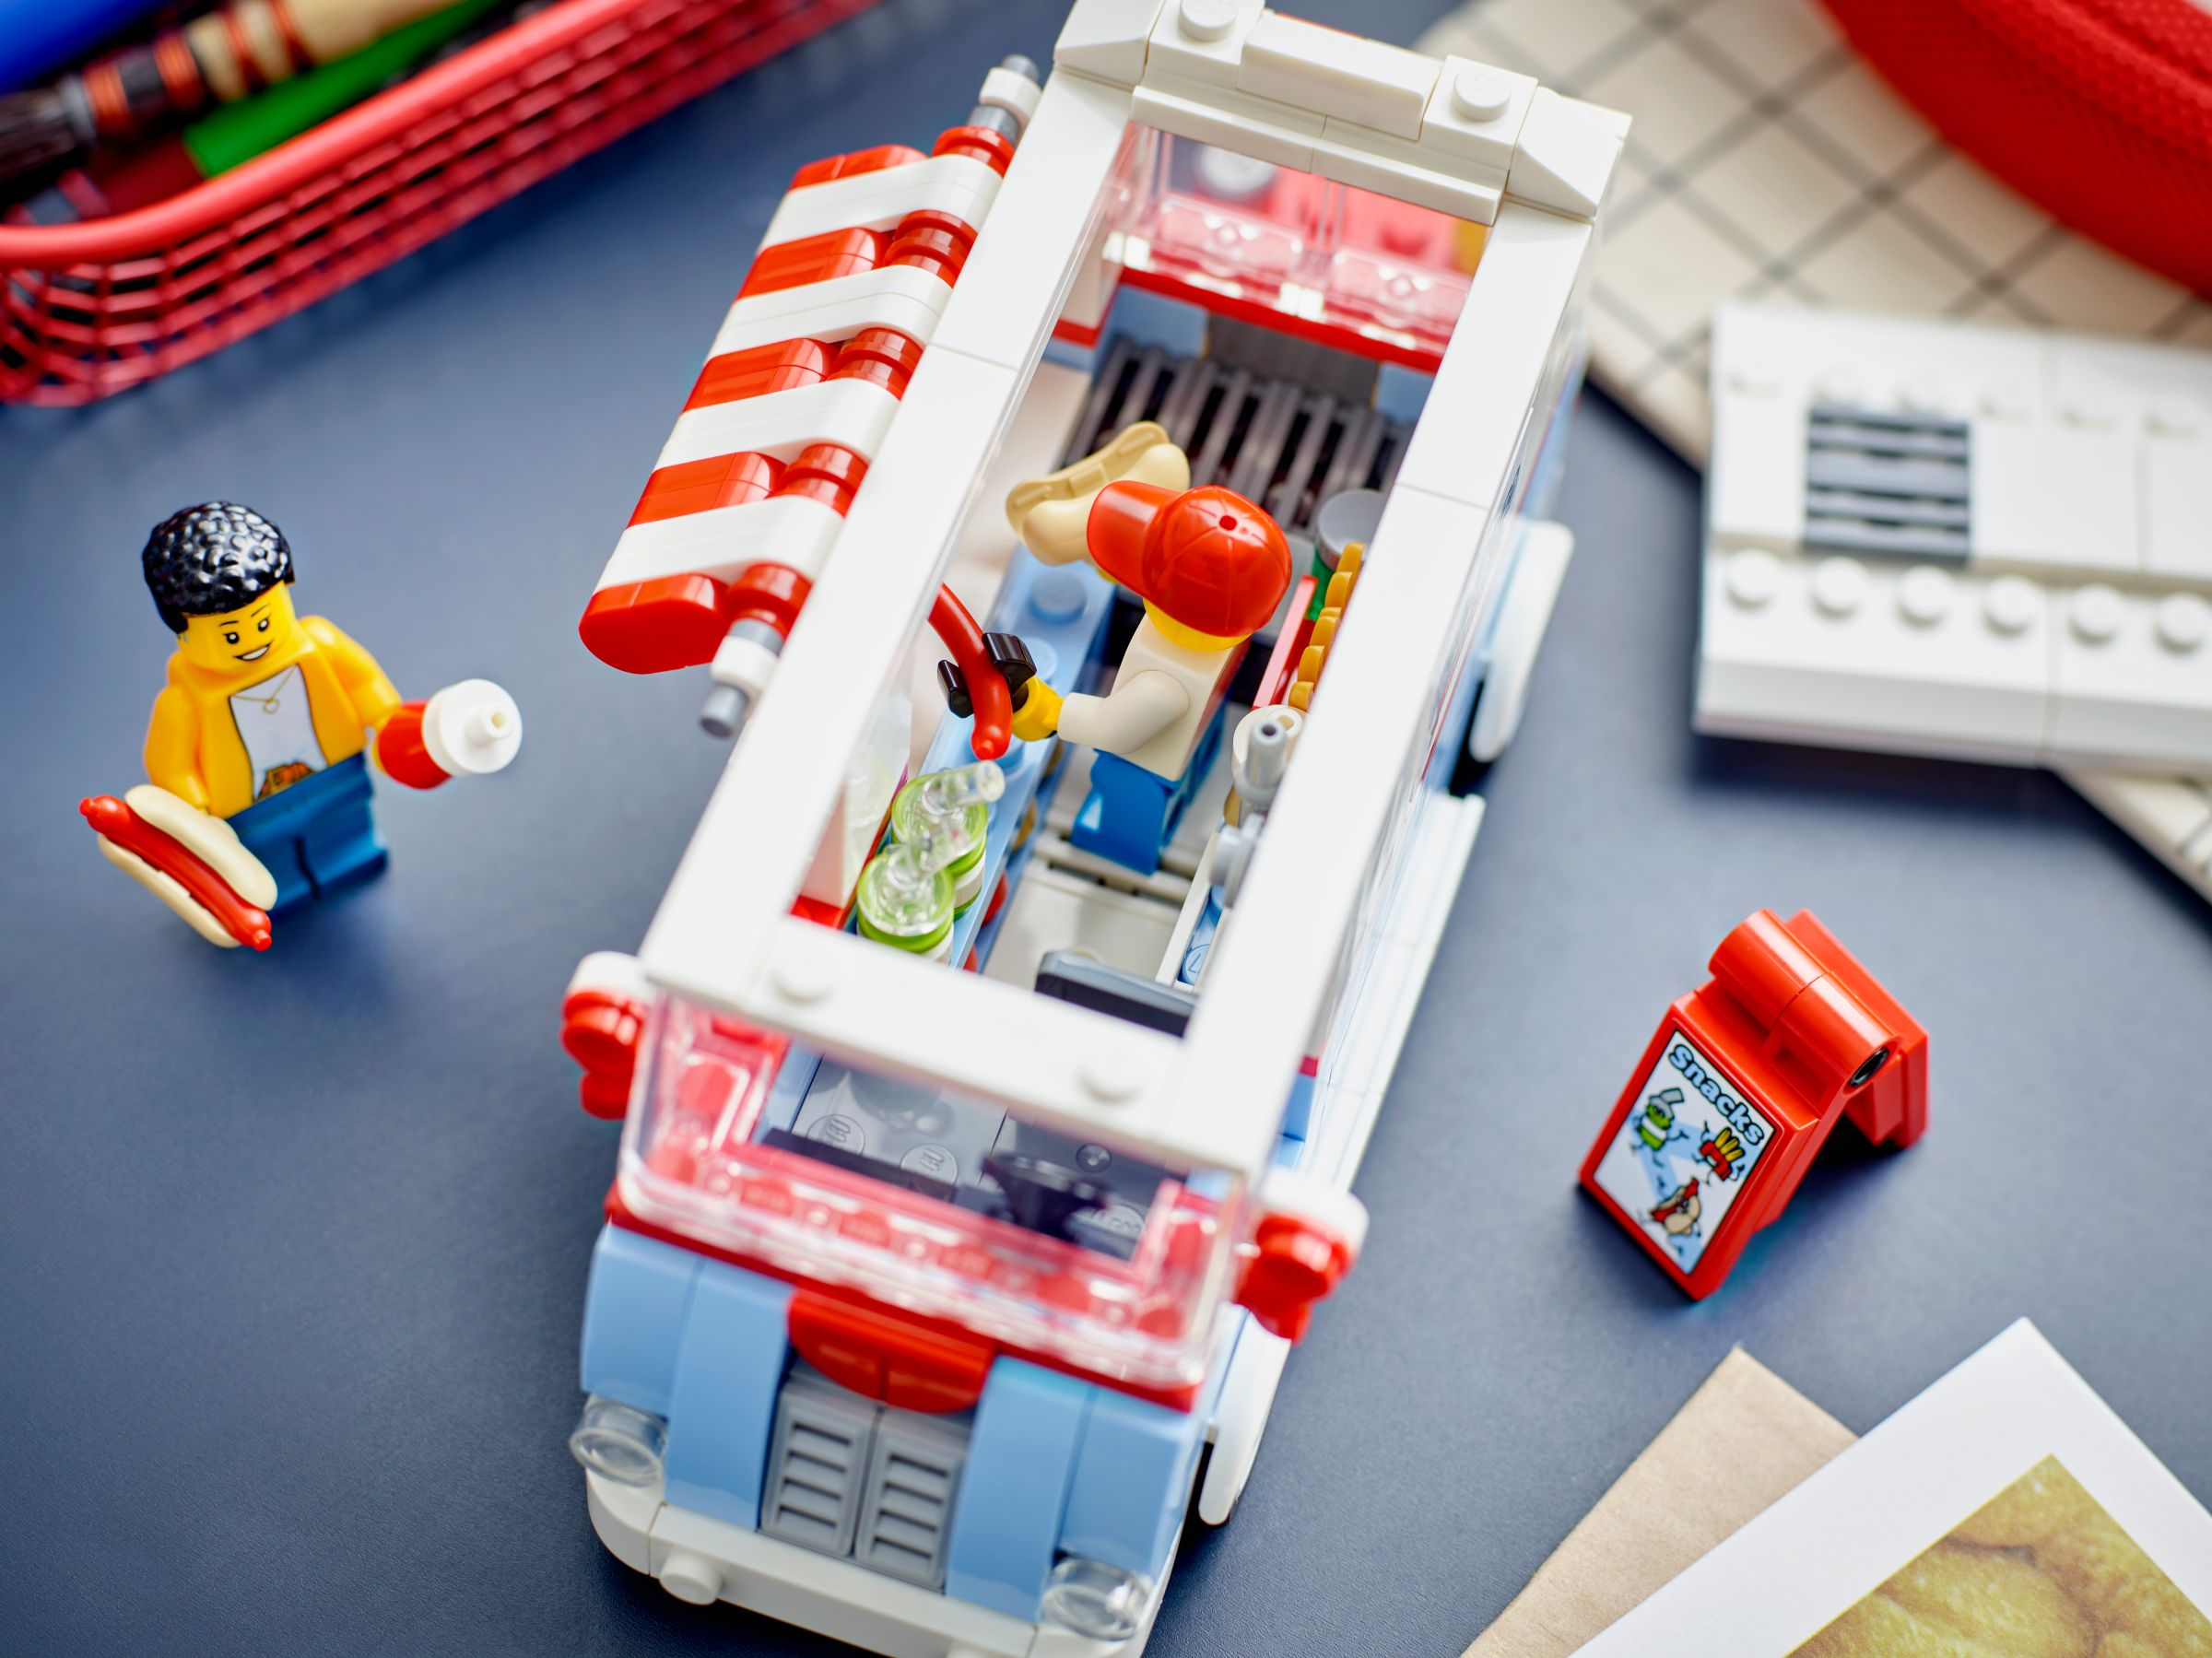 LEGO LEGO® 40681 Truck Bausatz Icons Food Retro